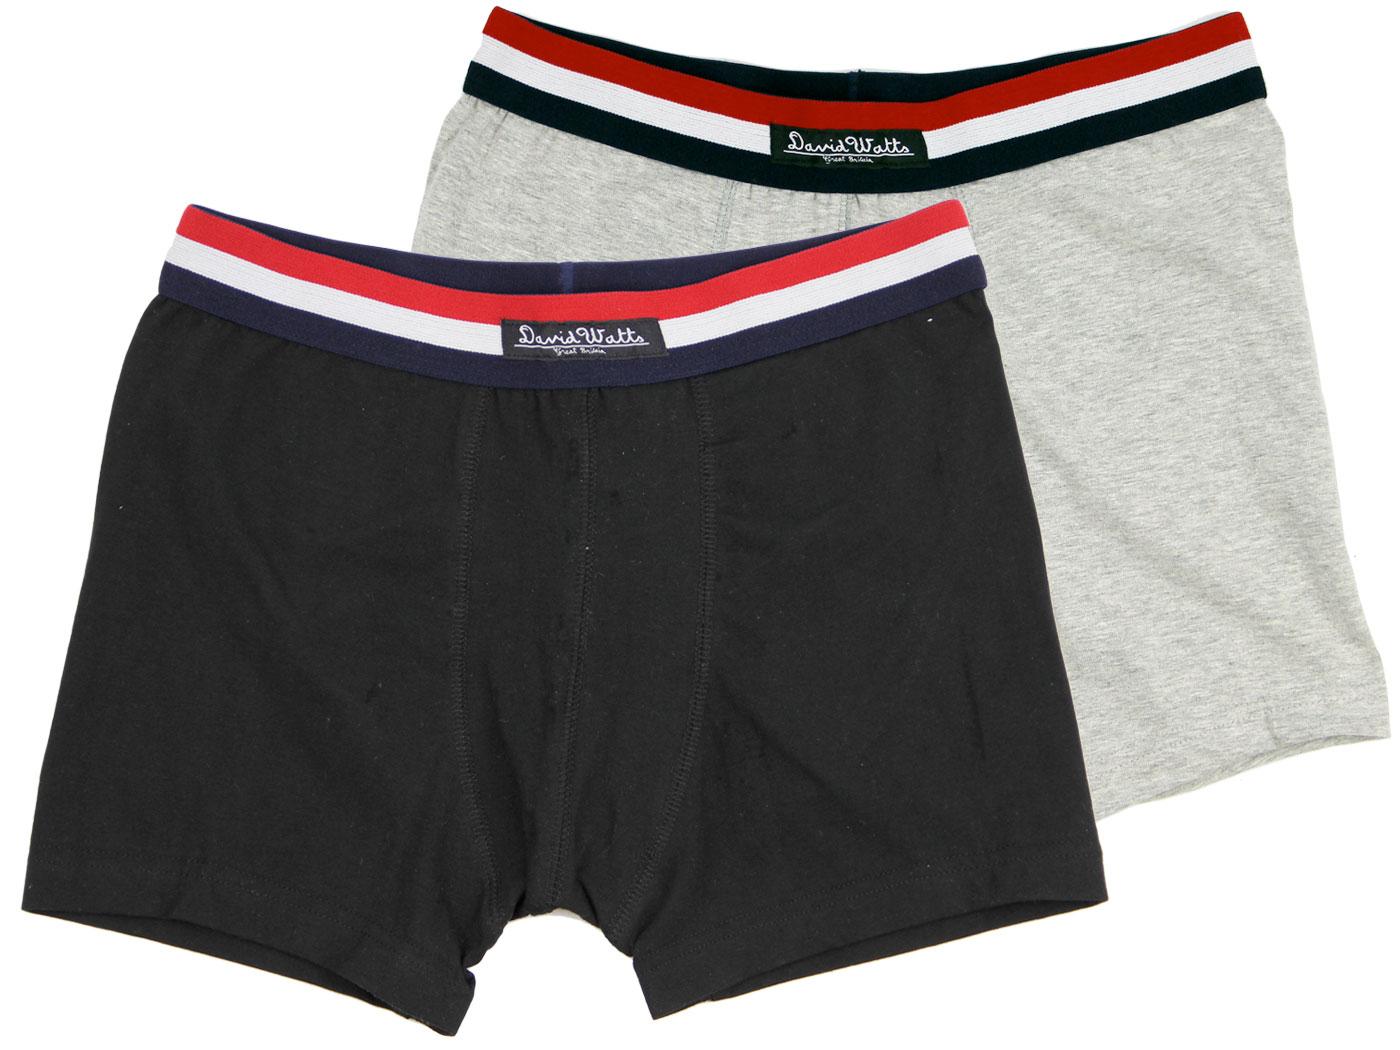 David Watts Twin Pack of Retro Men's Boxer Shorts Gift Set